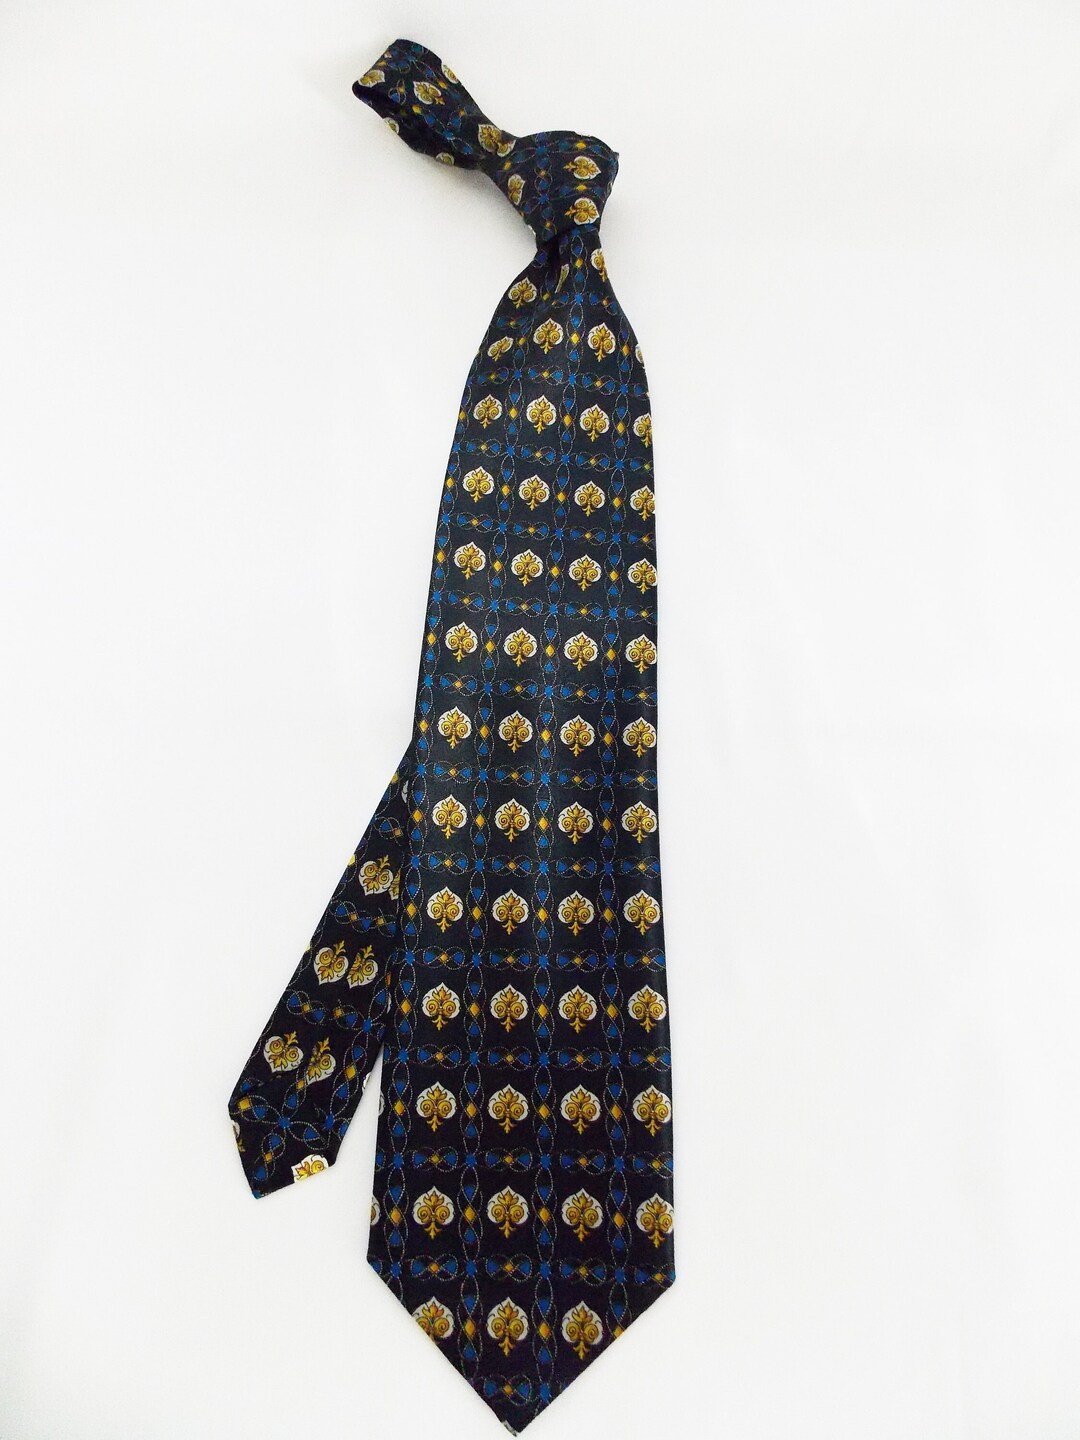 Black Spades Tie for Men Black Satin Necktie Black and Gold - Etsy